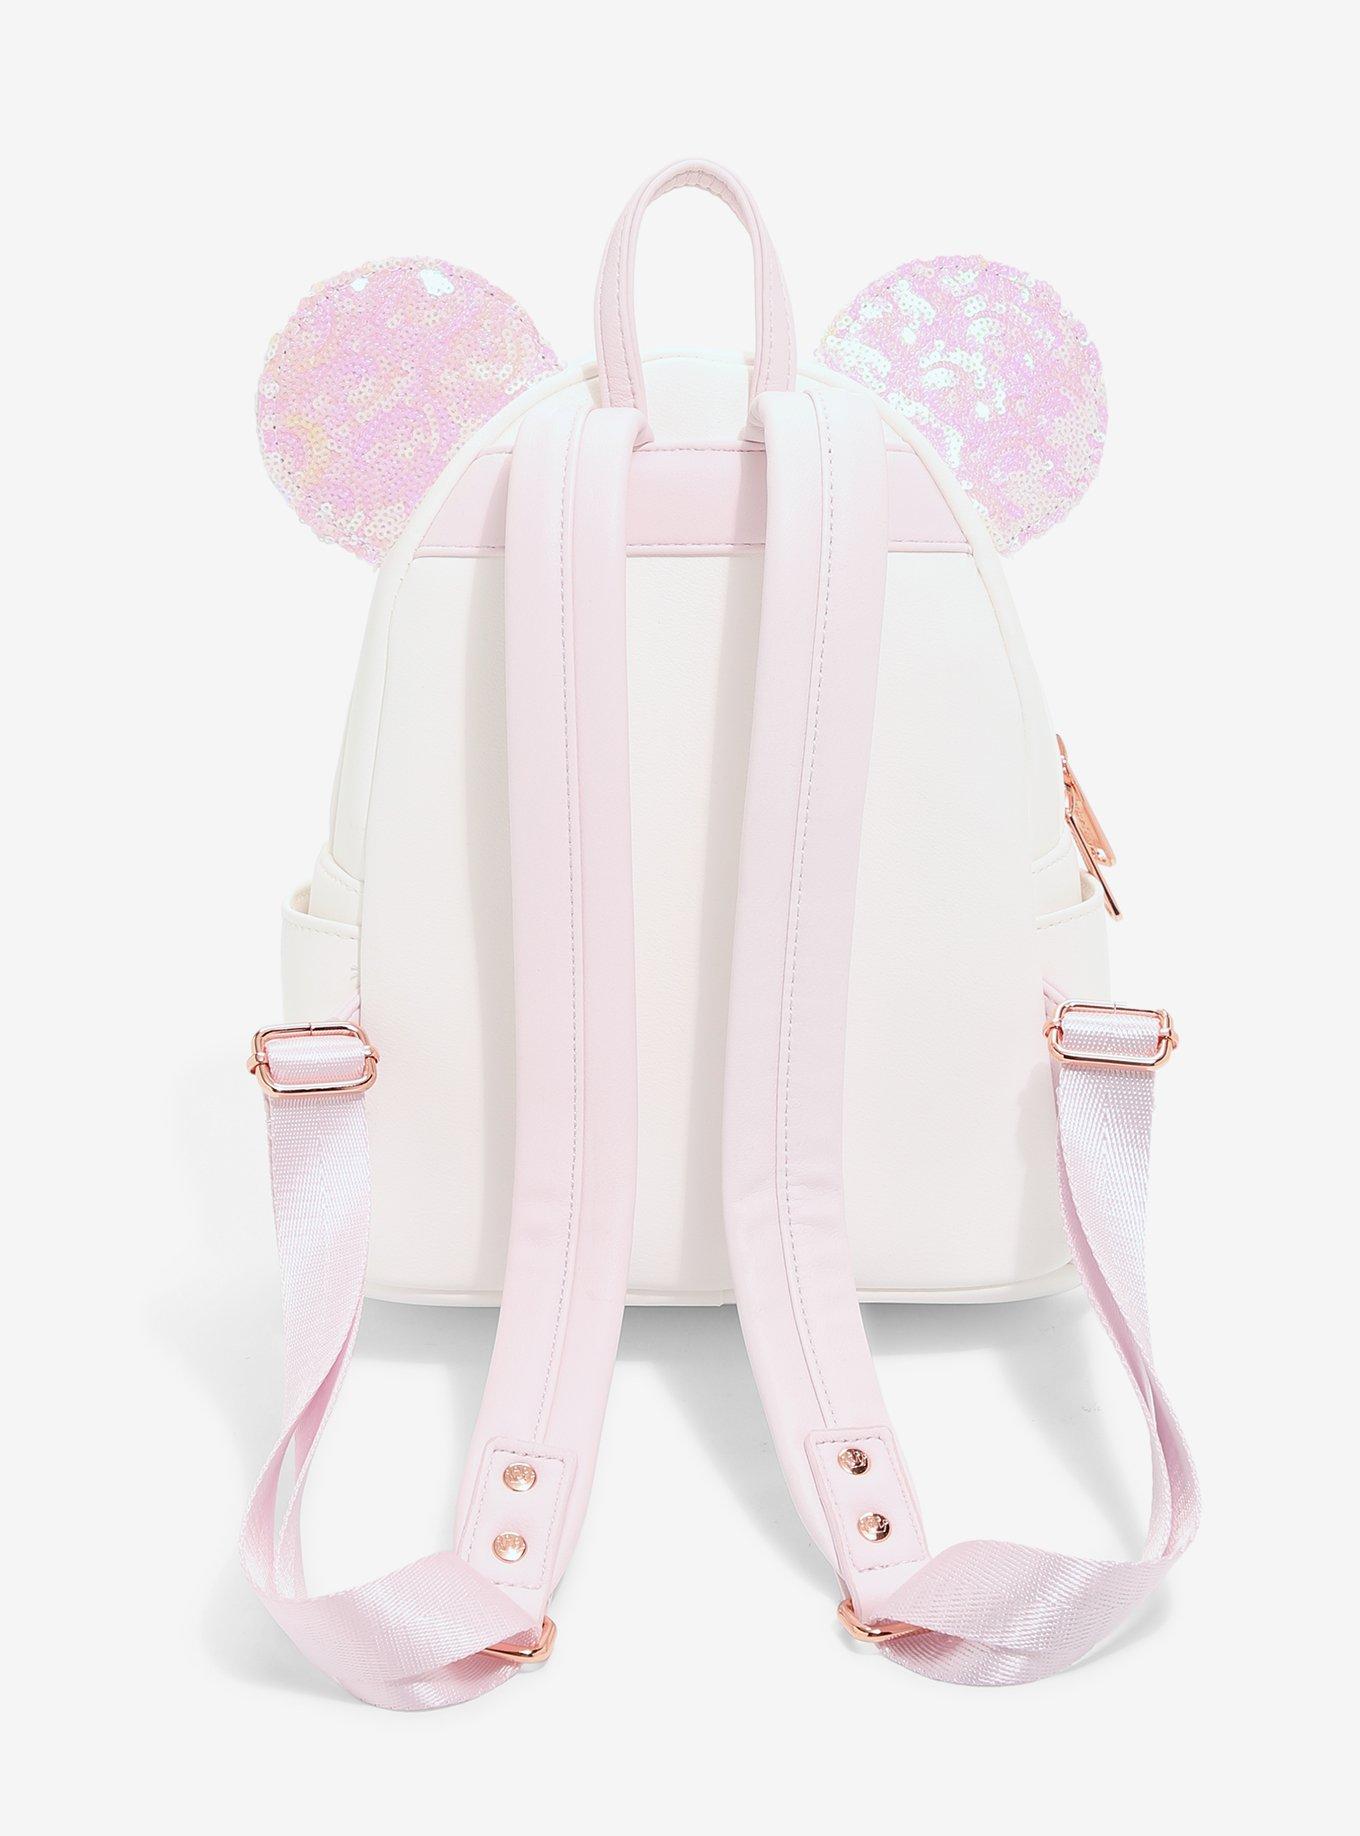 Loungefly X LASR Exclusive Disney Planet Minnie UV Reactive Pink Iridescent  Sequin Mini Backpack WDBK2421